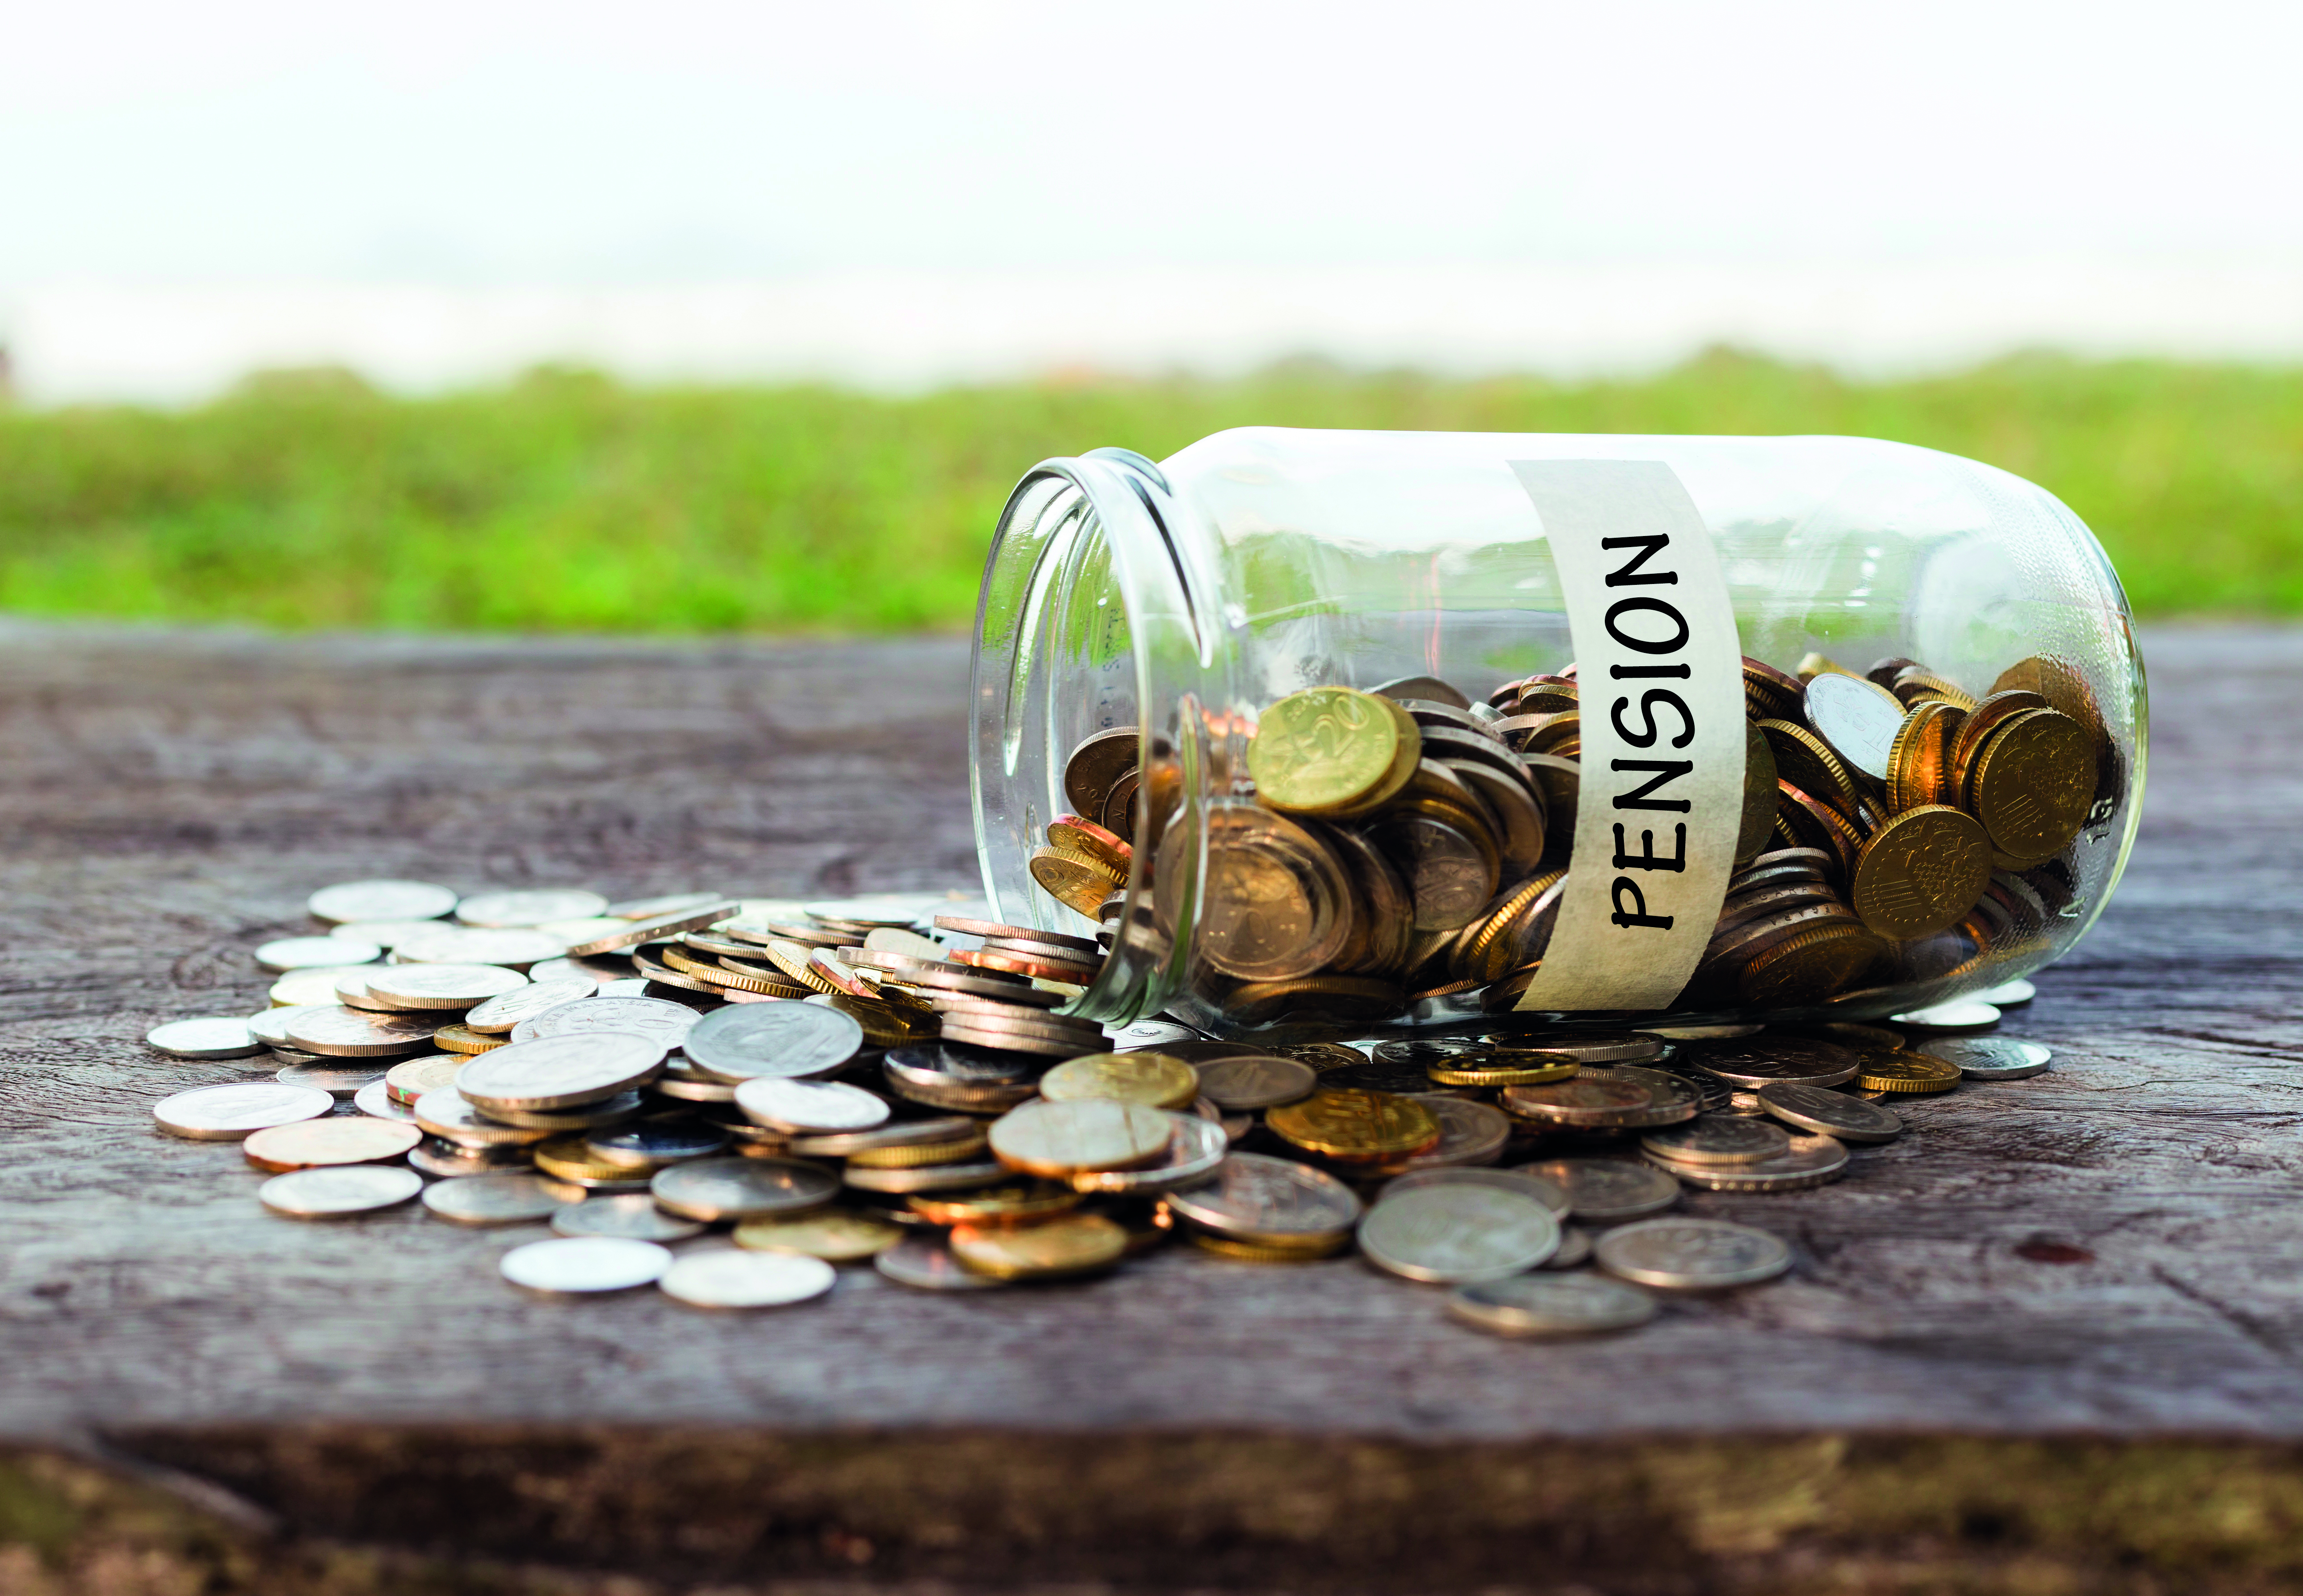 Pension jar tipped over spilling coins